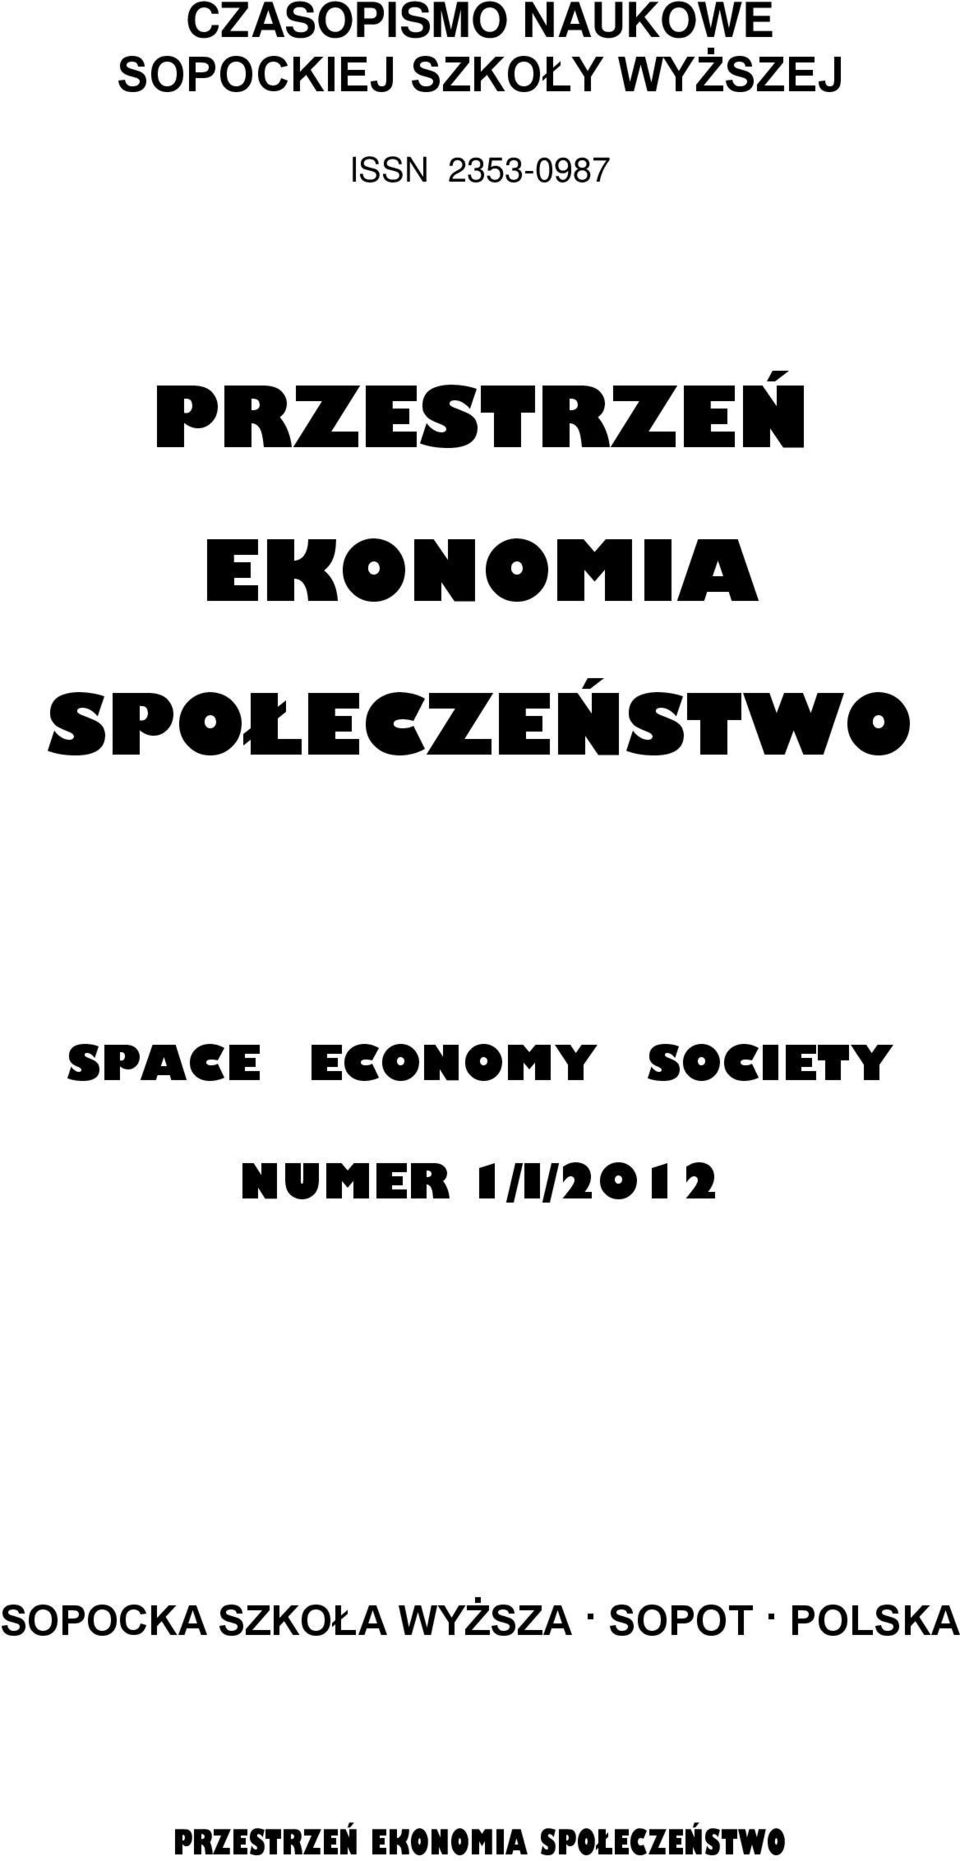 ECONOMY SOCIETY NUMER 1/I/2012 SOPOCKA SZKOŁA